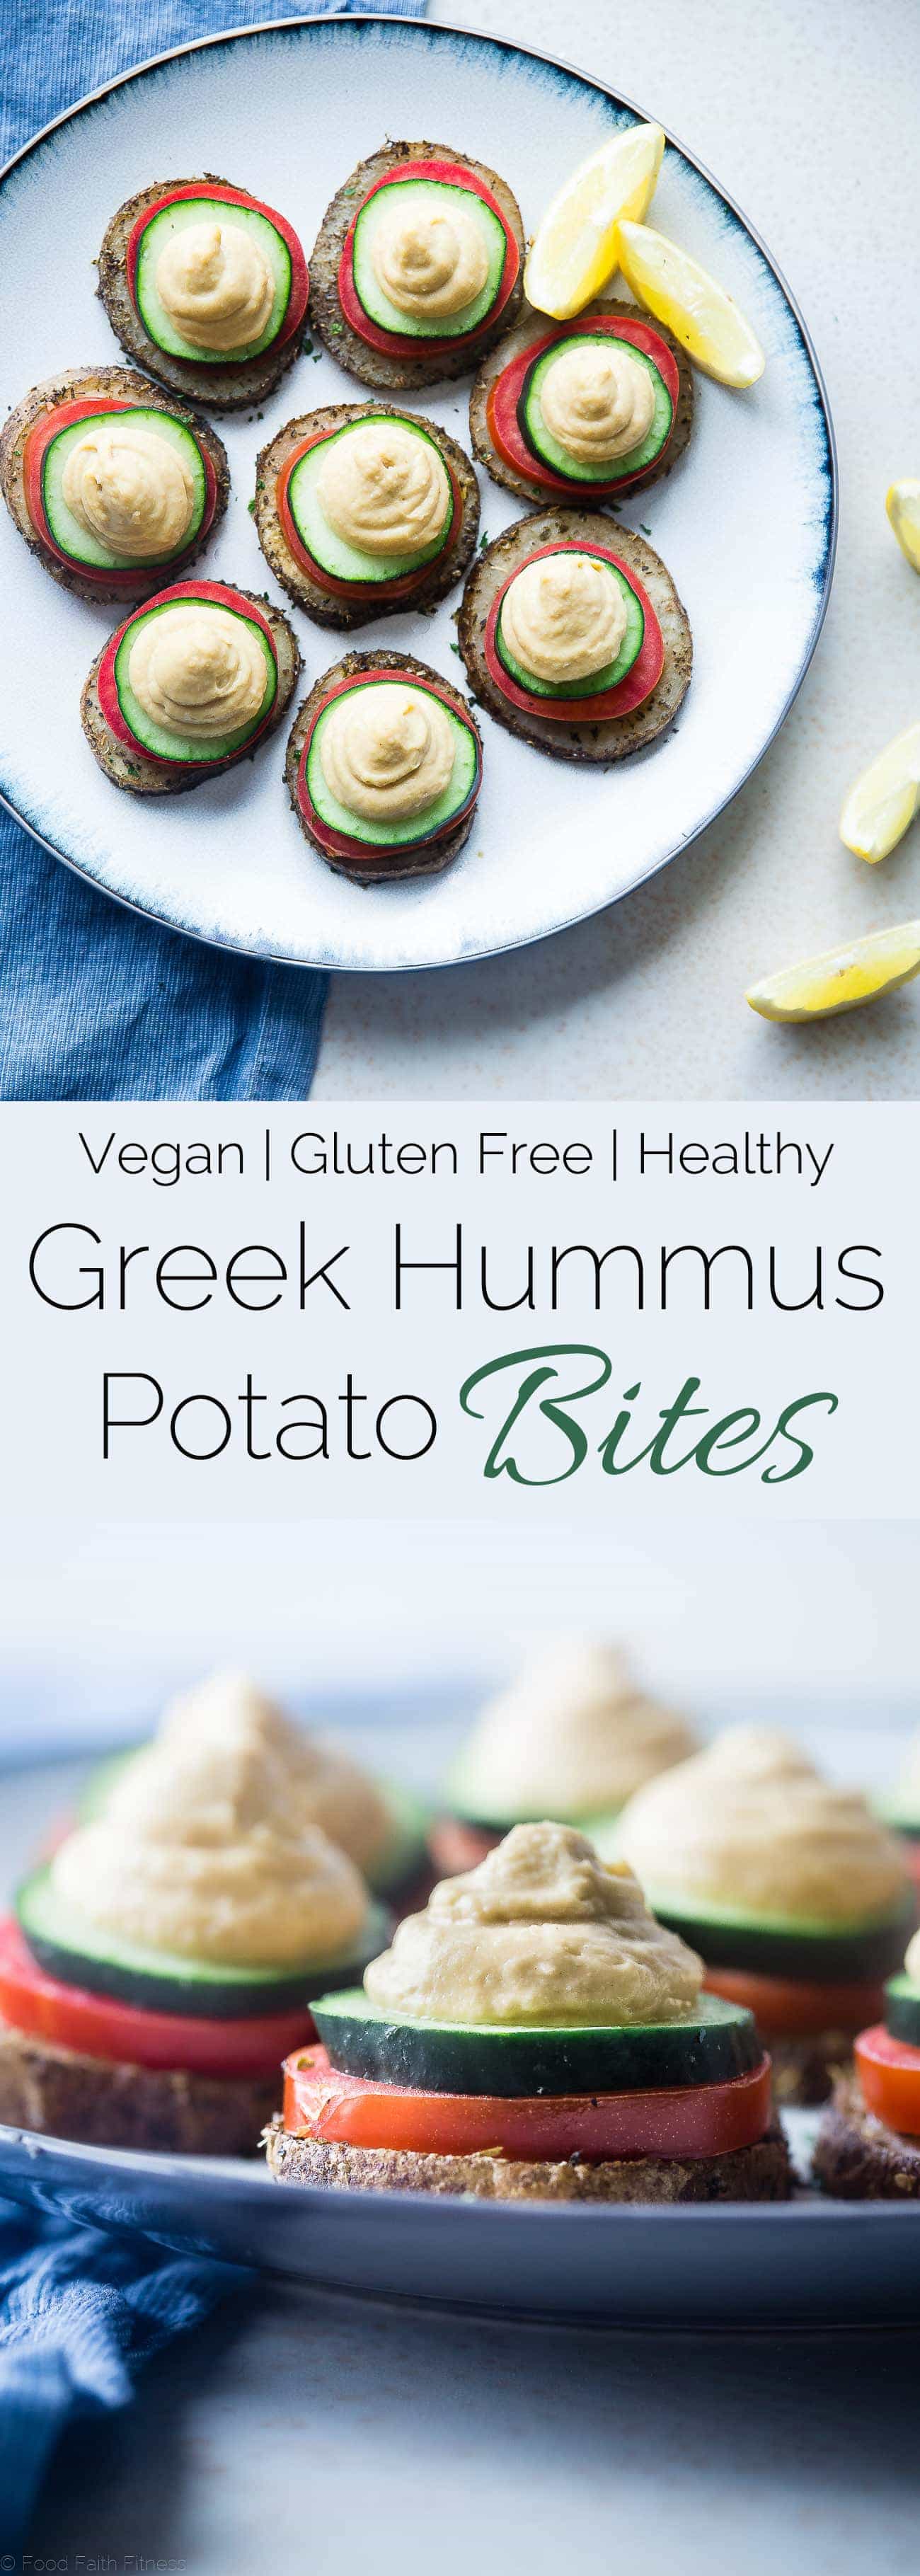 Vegan Hummus Greek Potato Bites - These healthy, vegan Greek potato bites are the perfect party food or snack! They taste like Greek salad and are gluten and dairy free! | Foodfaithfitness.com | @FoodFaithFit